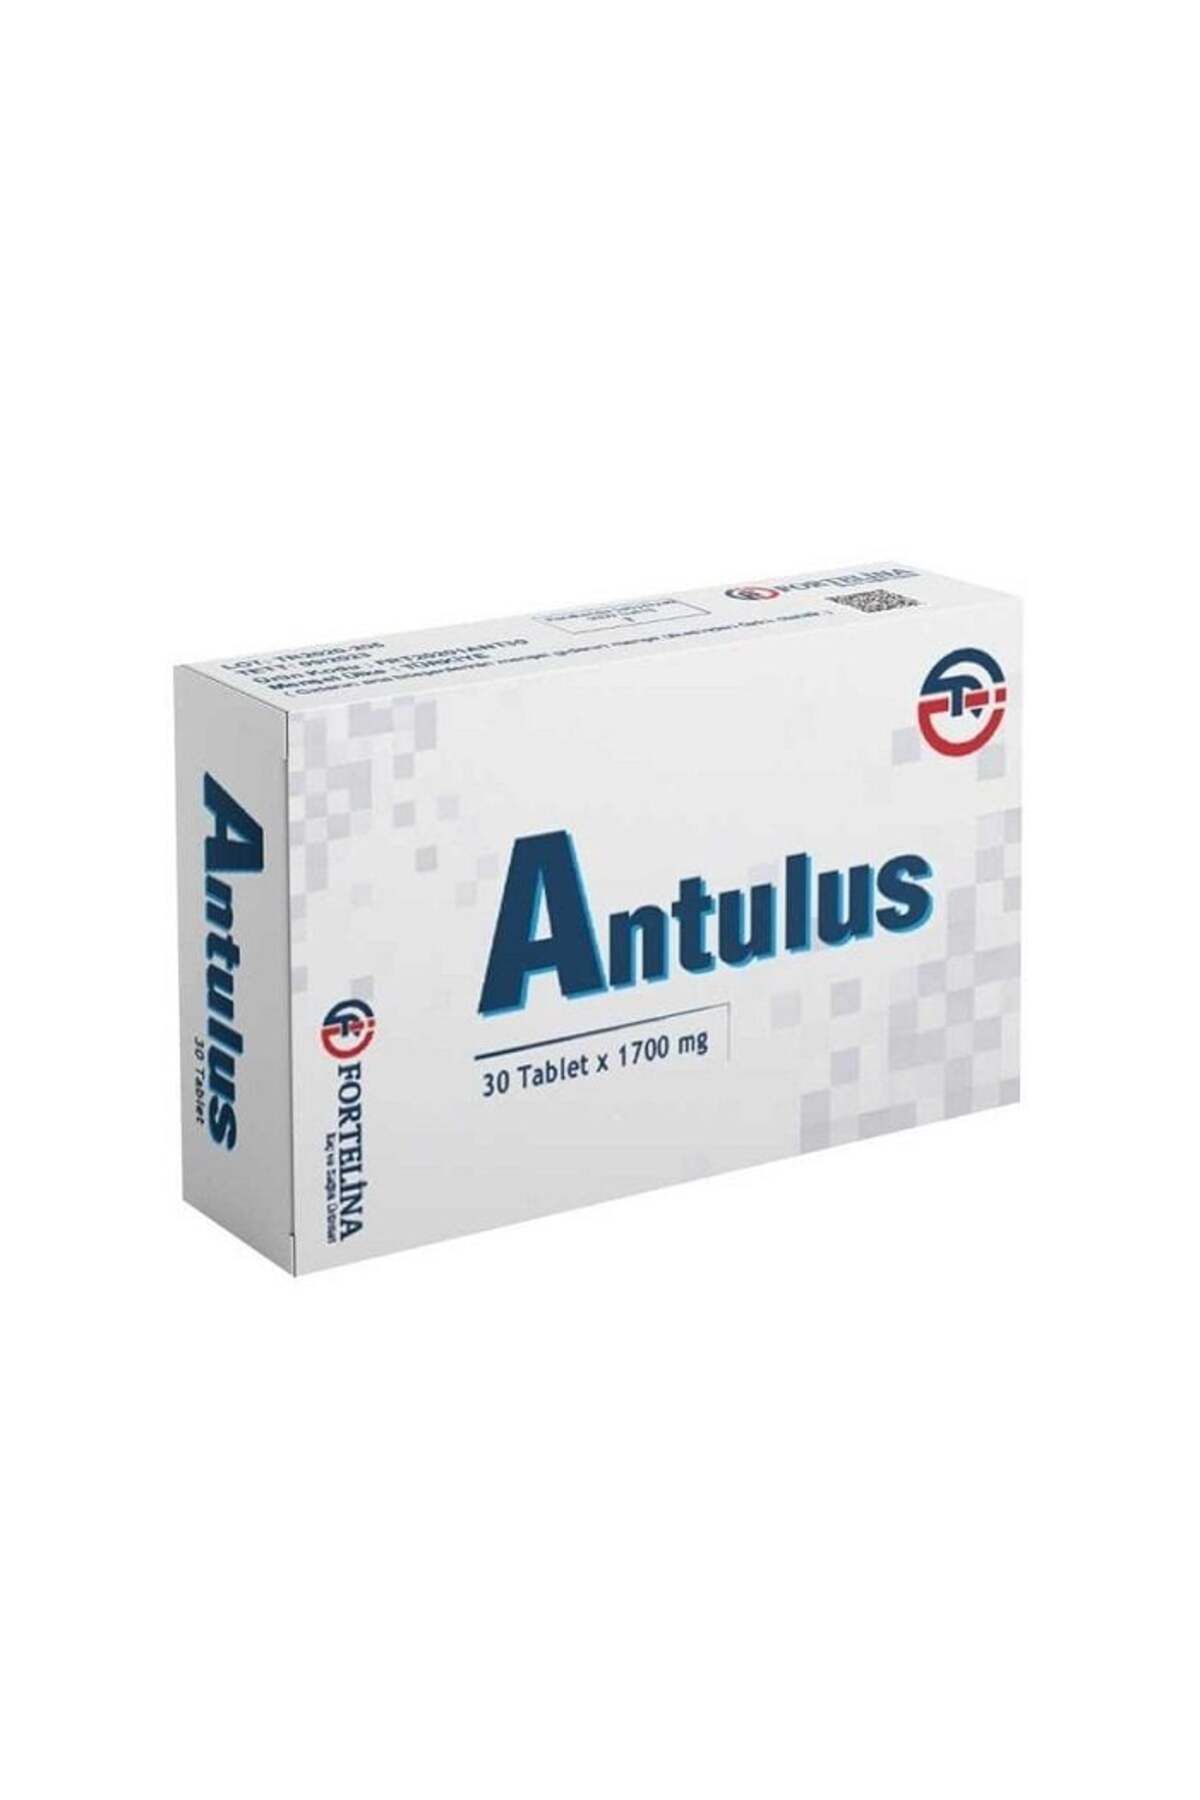 Antulus 30 Tablet